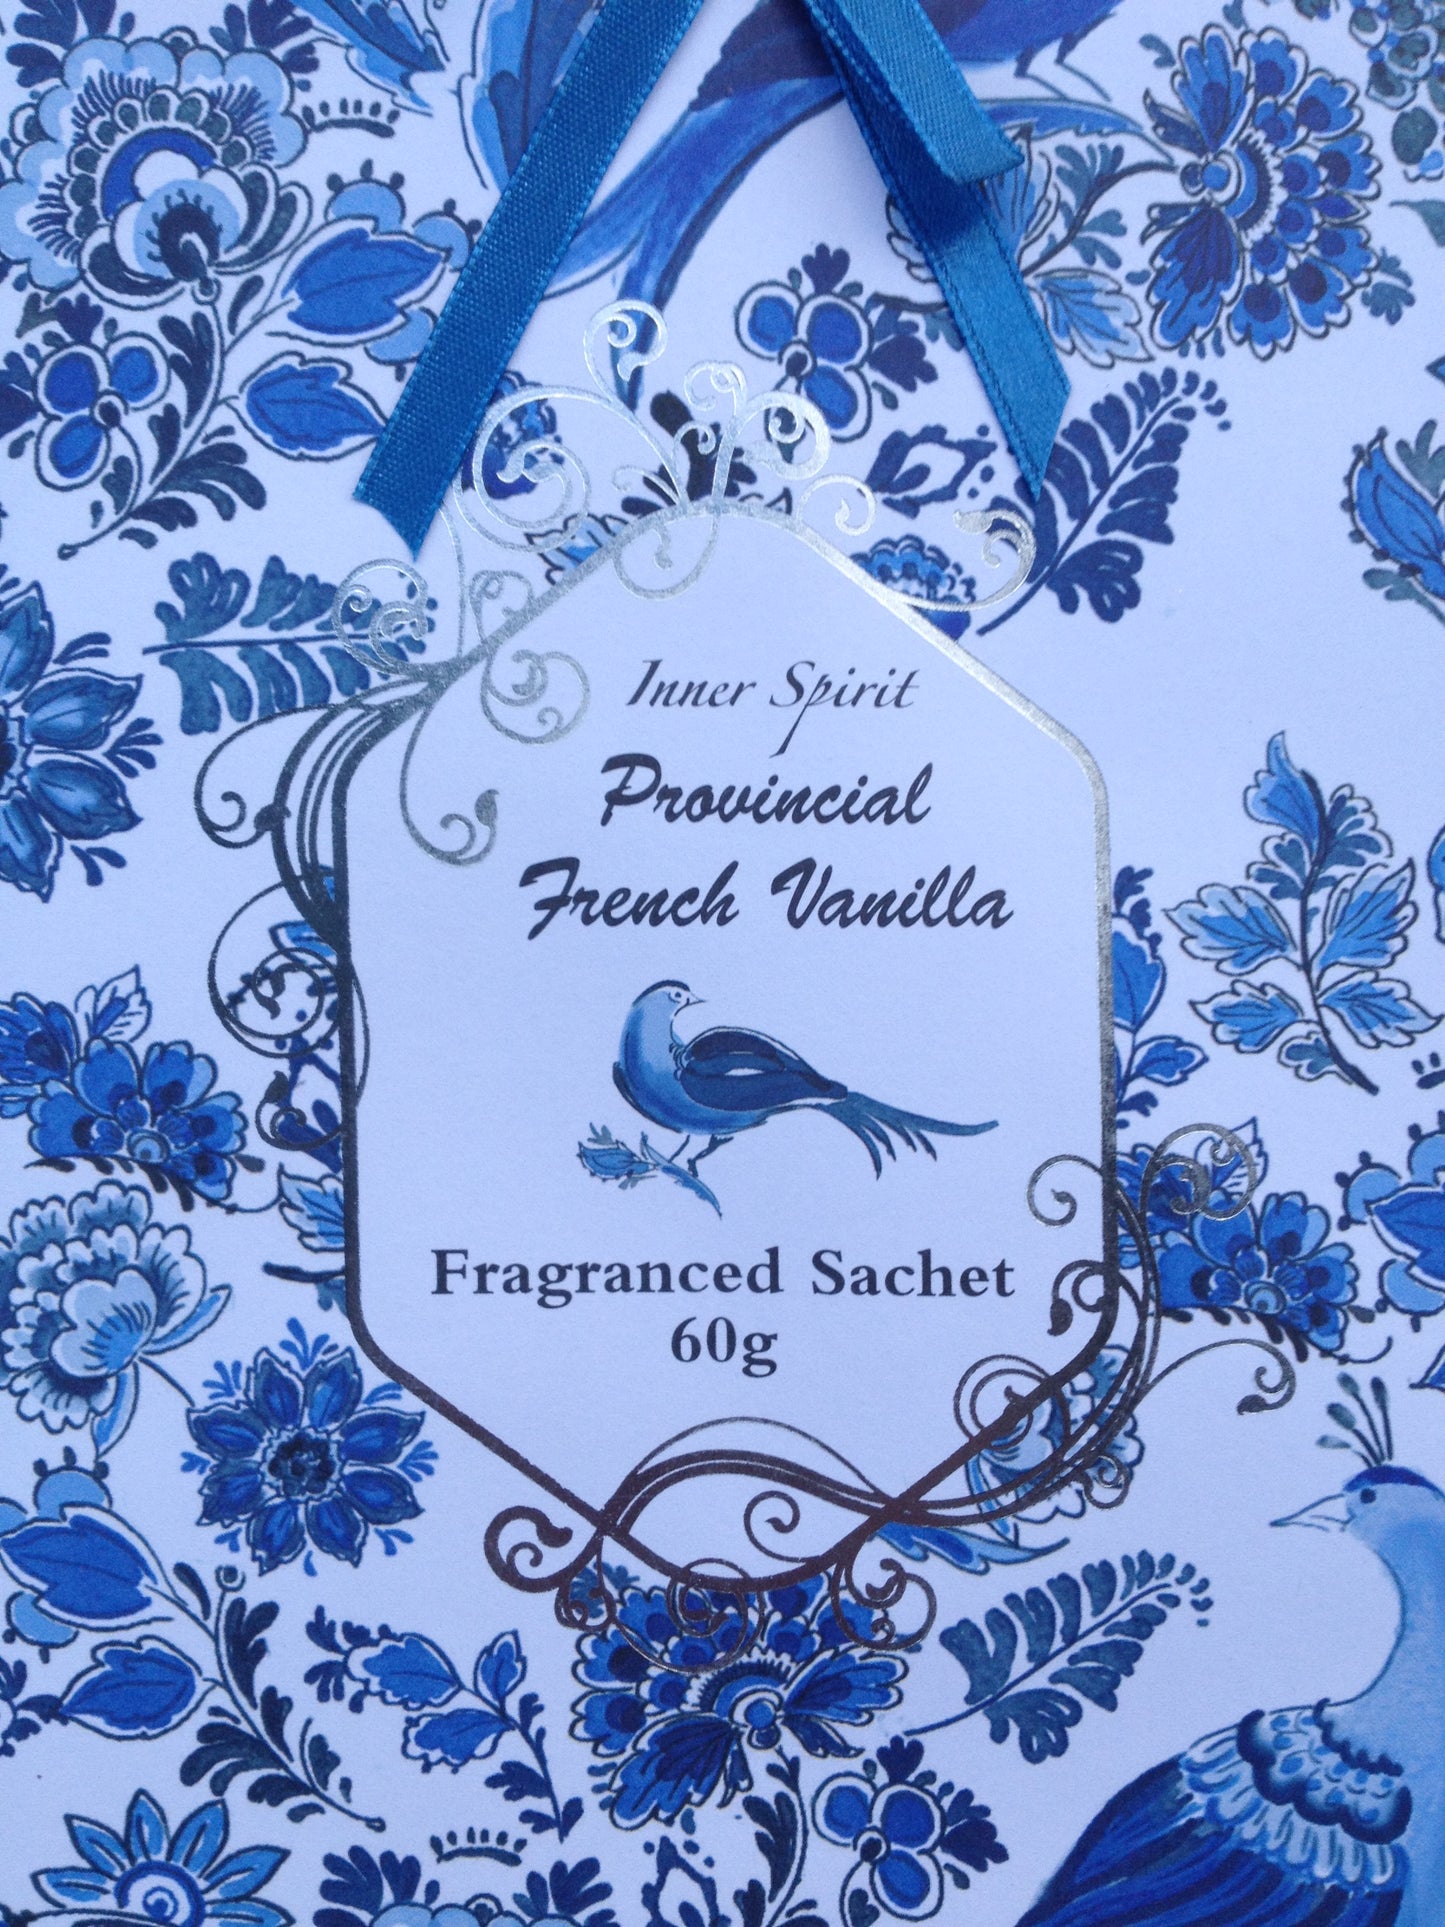 Provincial French Vanilla Fragranced Sachet